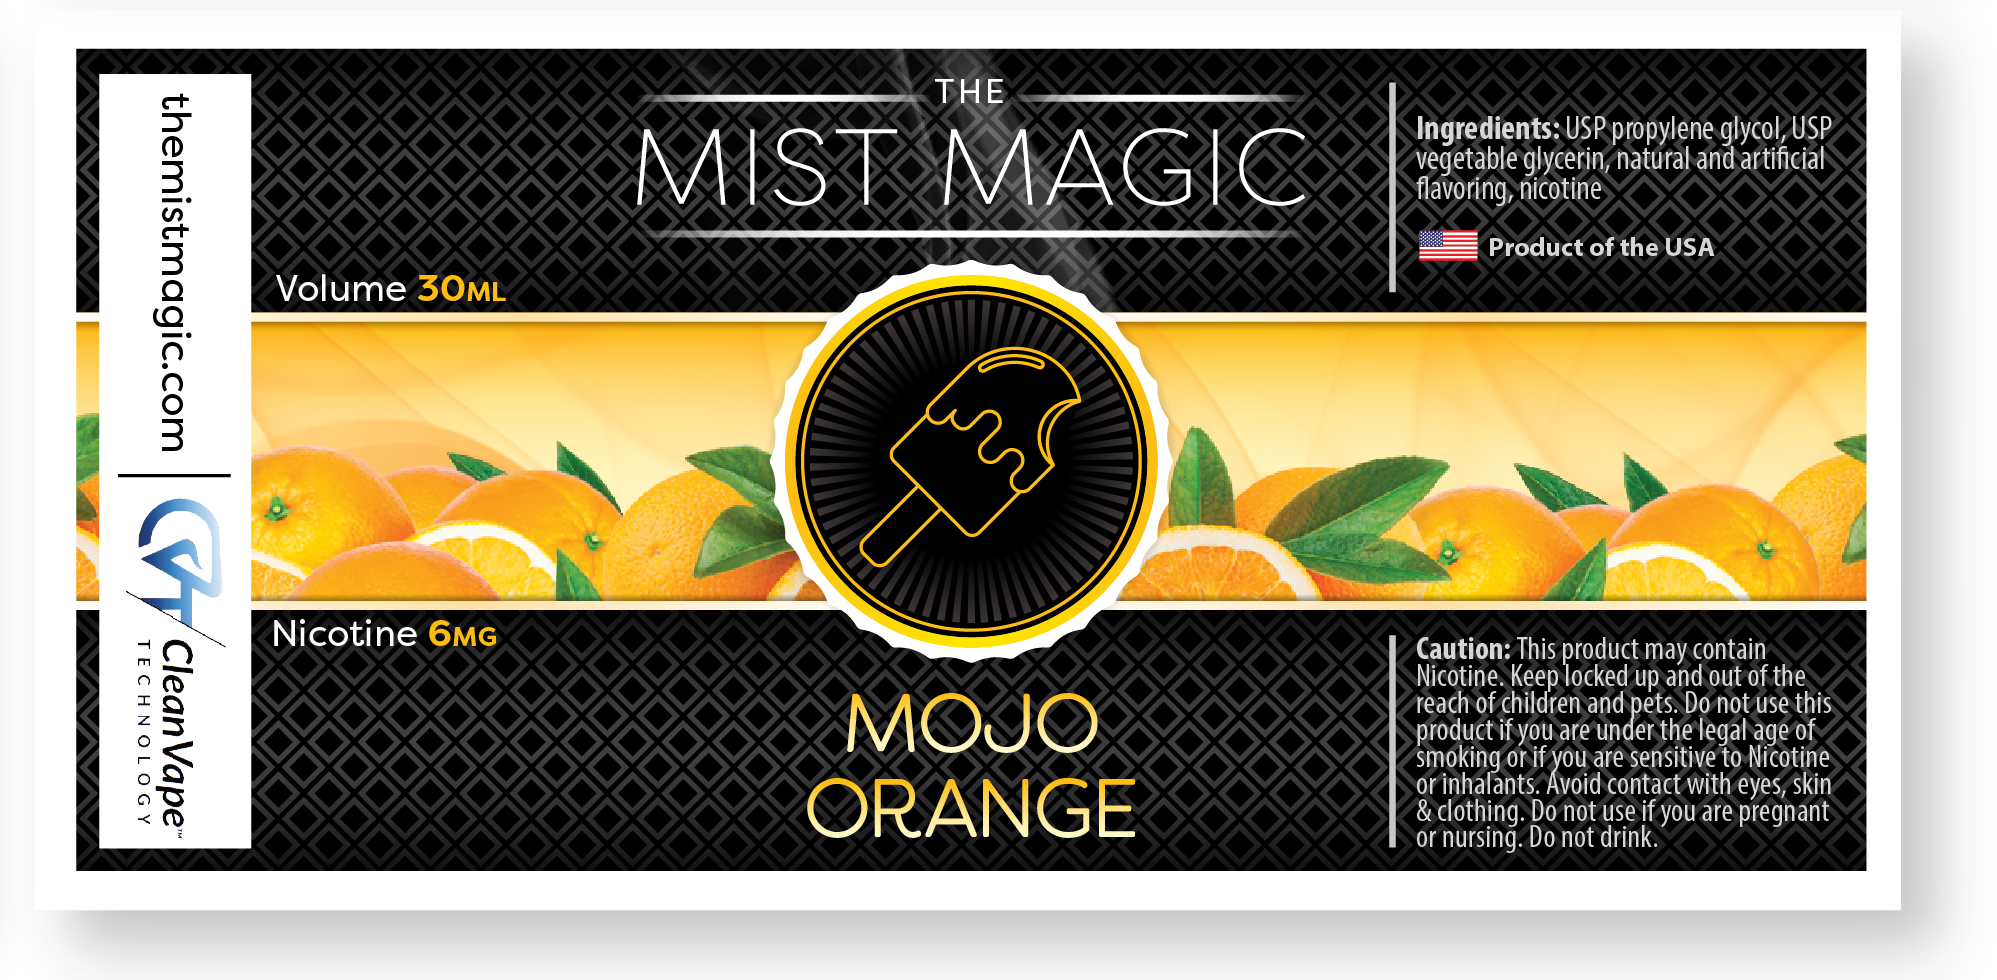 mist magic mojo orange package